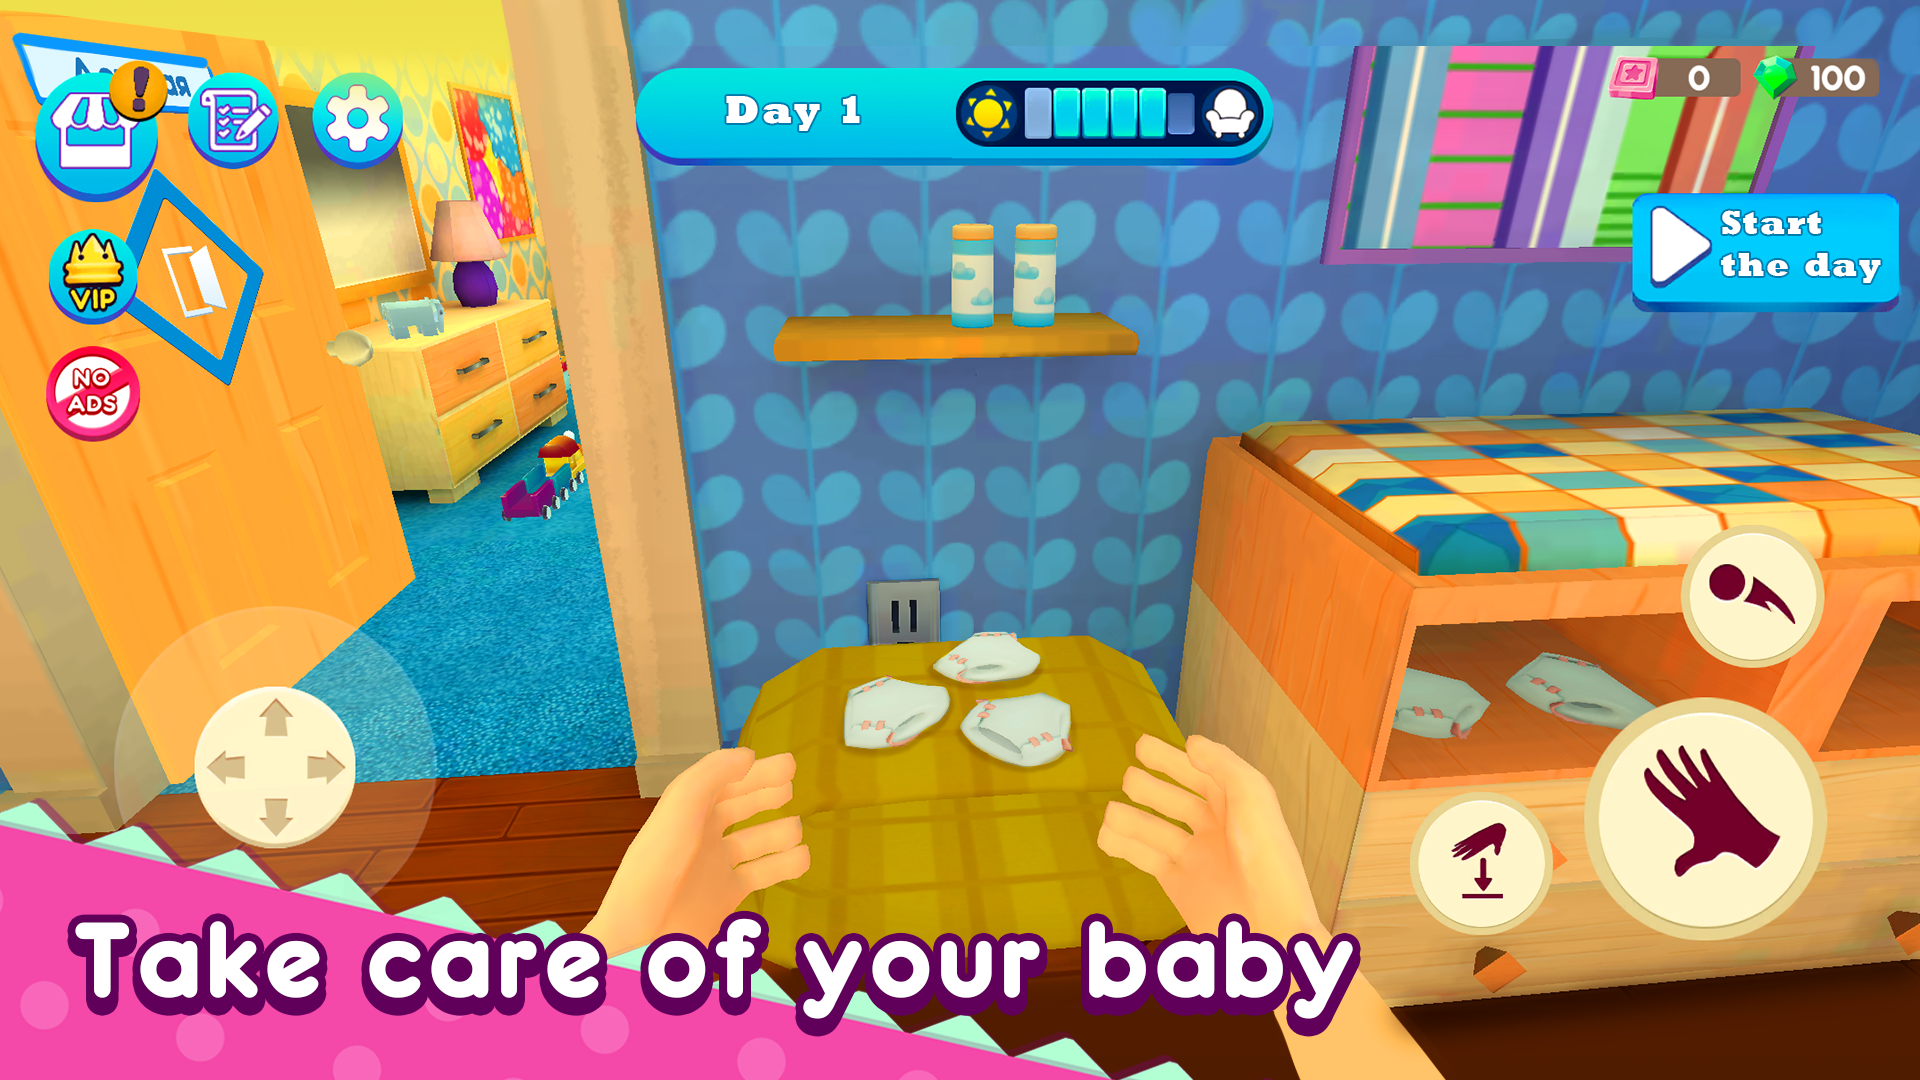 Mother Simulator Family life Gameplay